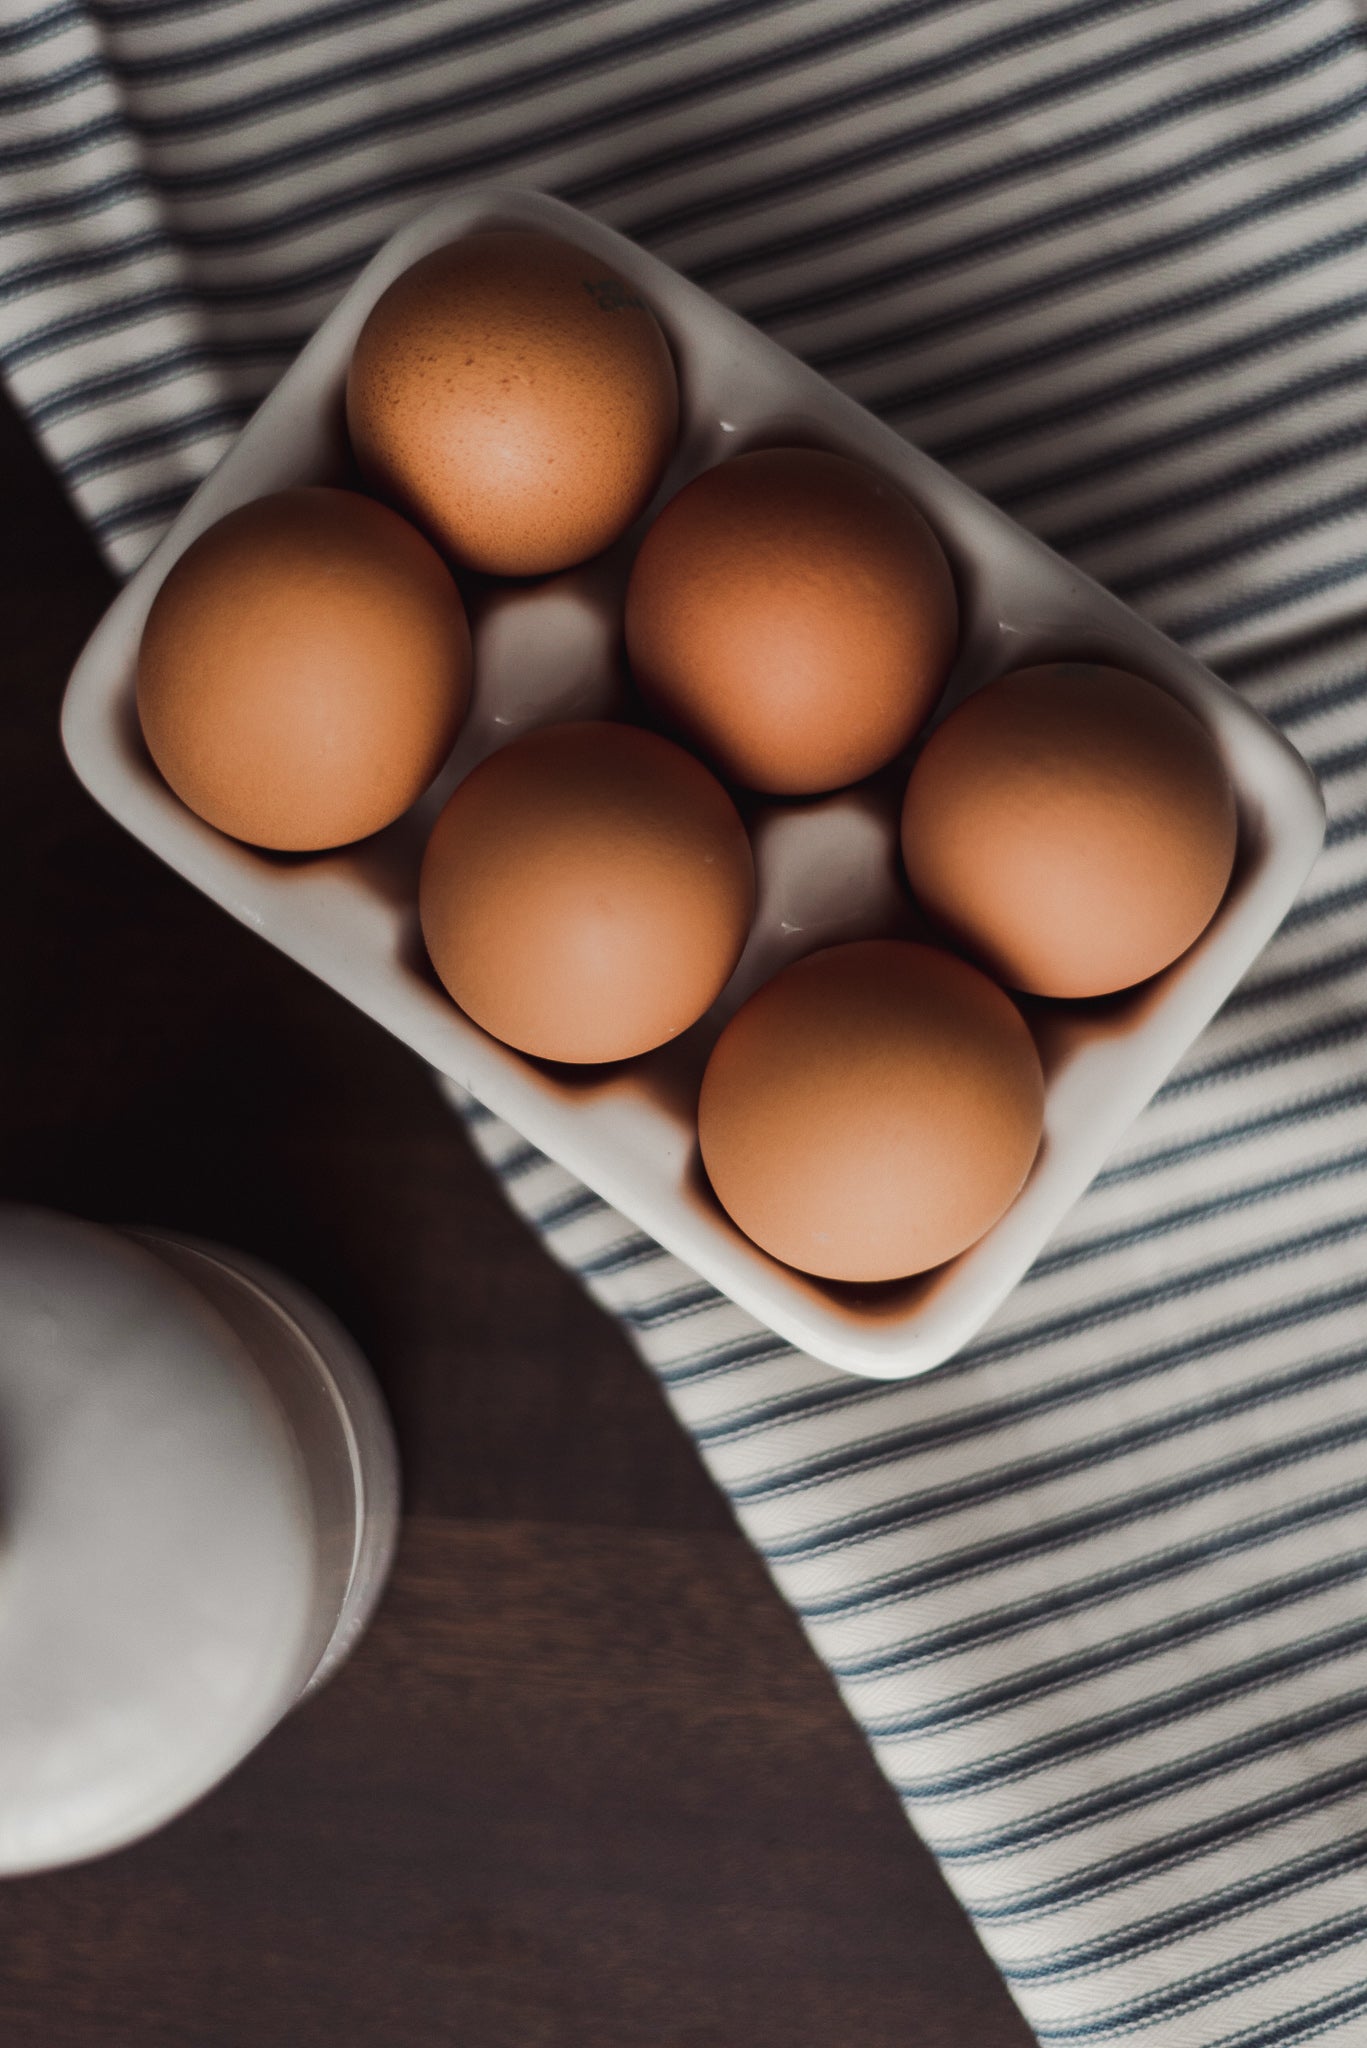 his ceramic half dozen egg holder makes cooking eggs instagram worthy and fun.